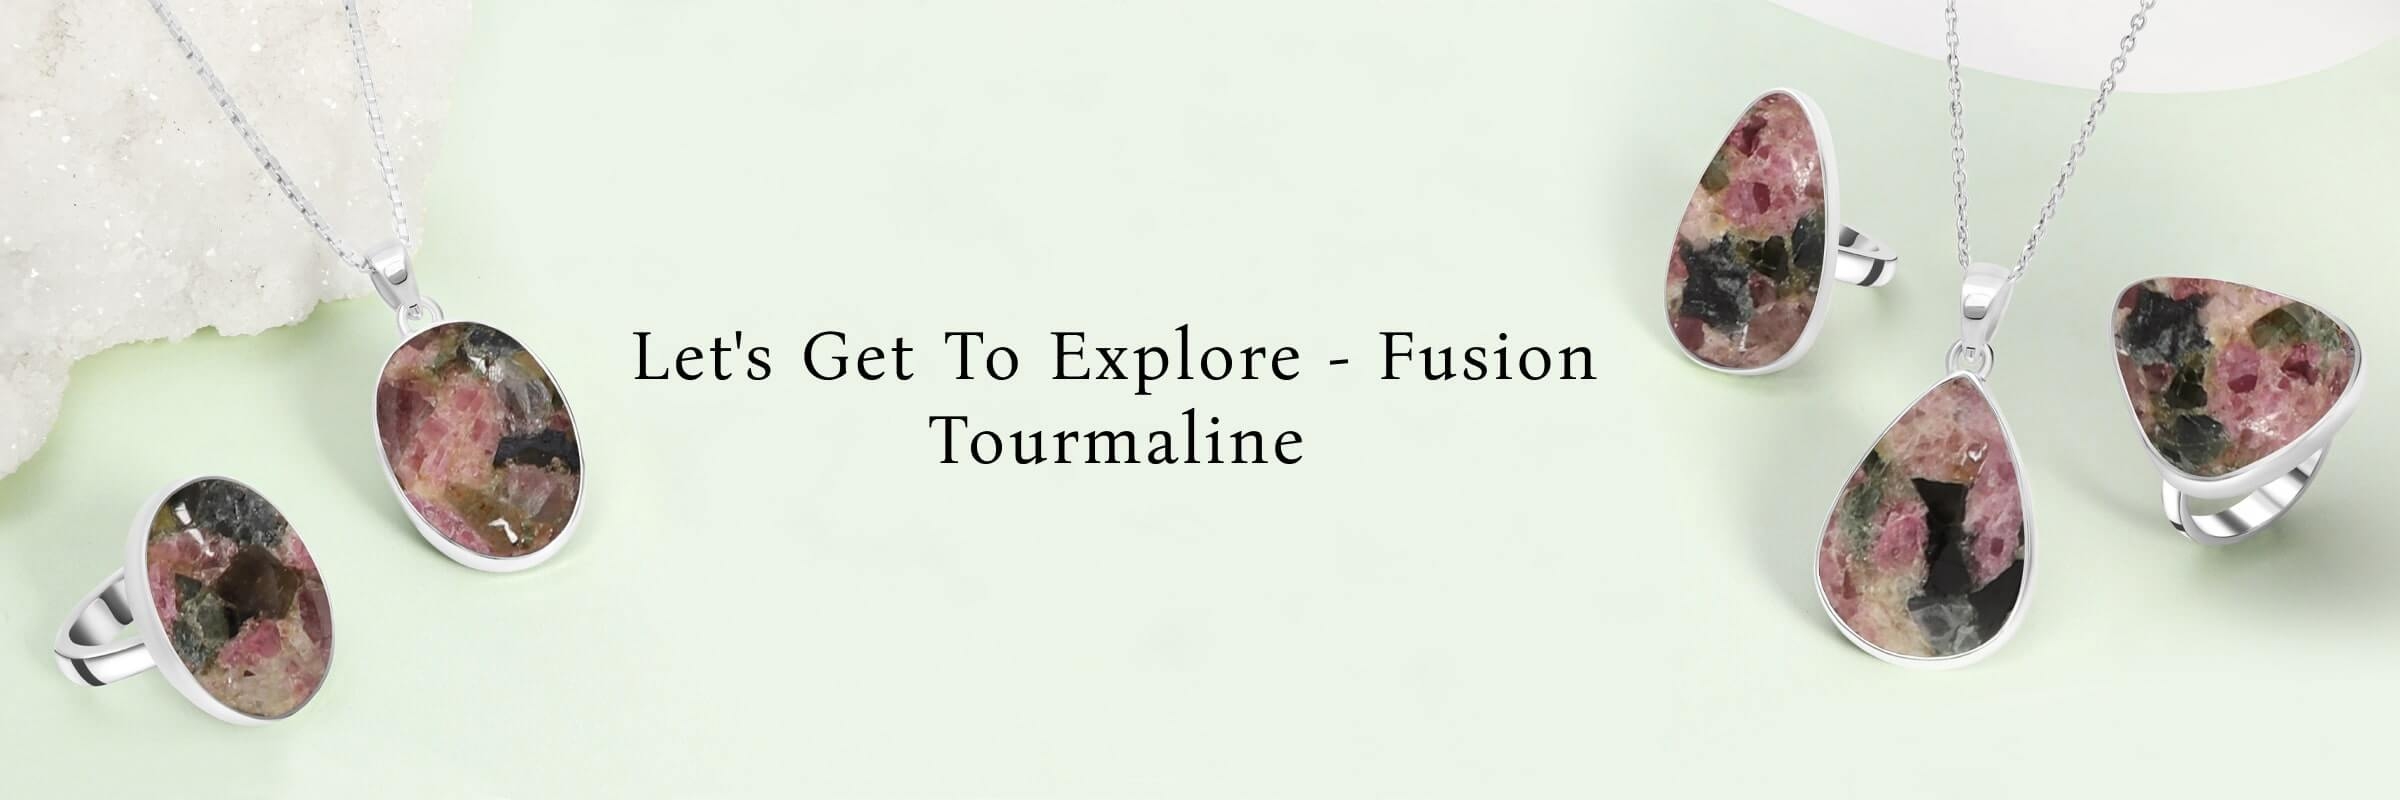 Uses of Fusion Tourmaline